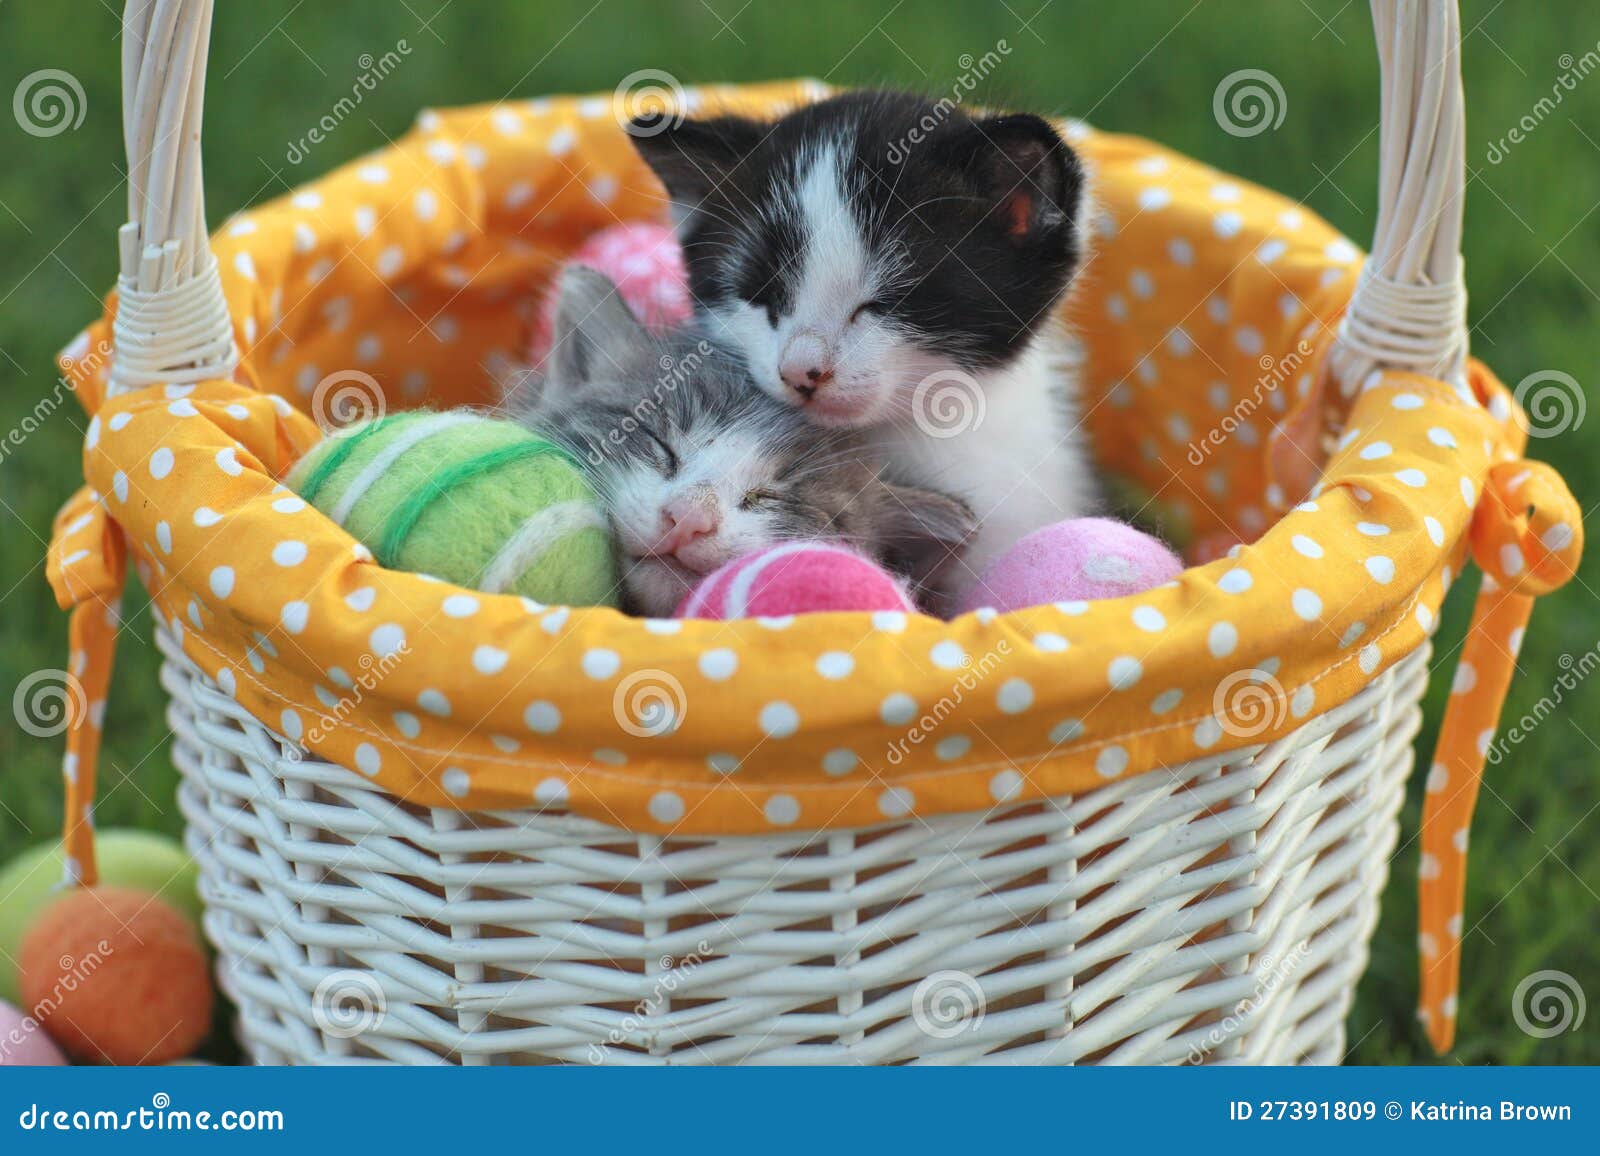 adorable-kittens-holiday-easter-basket-27391809.jpg